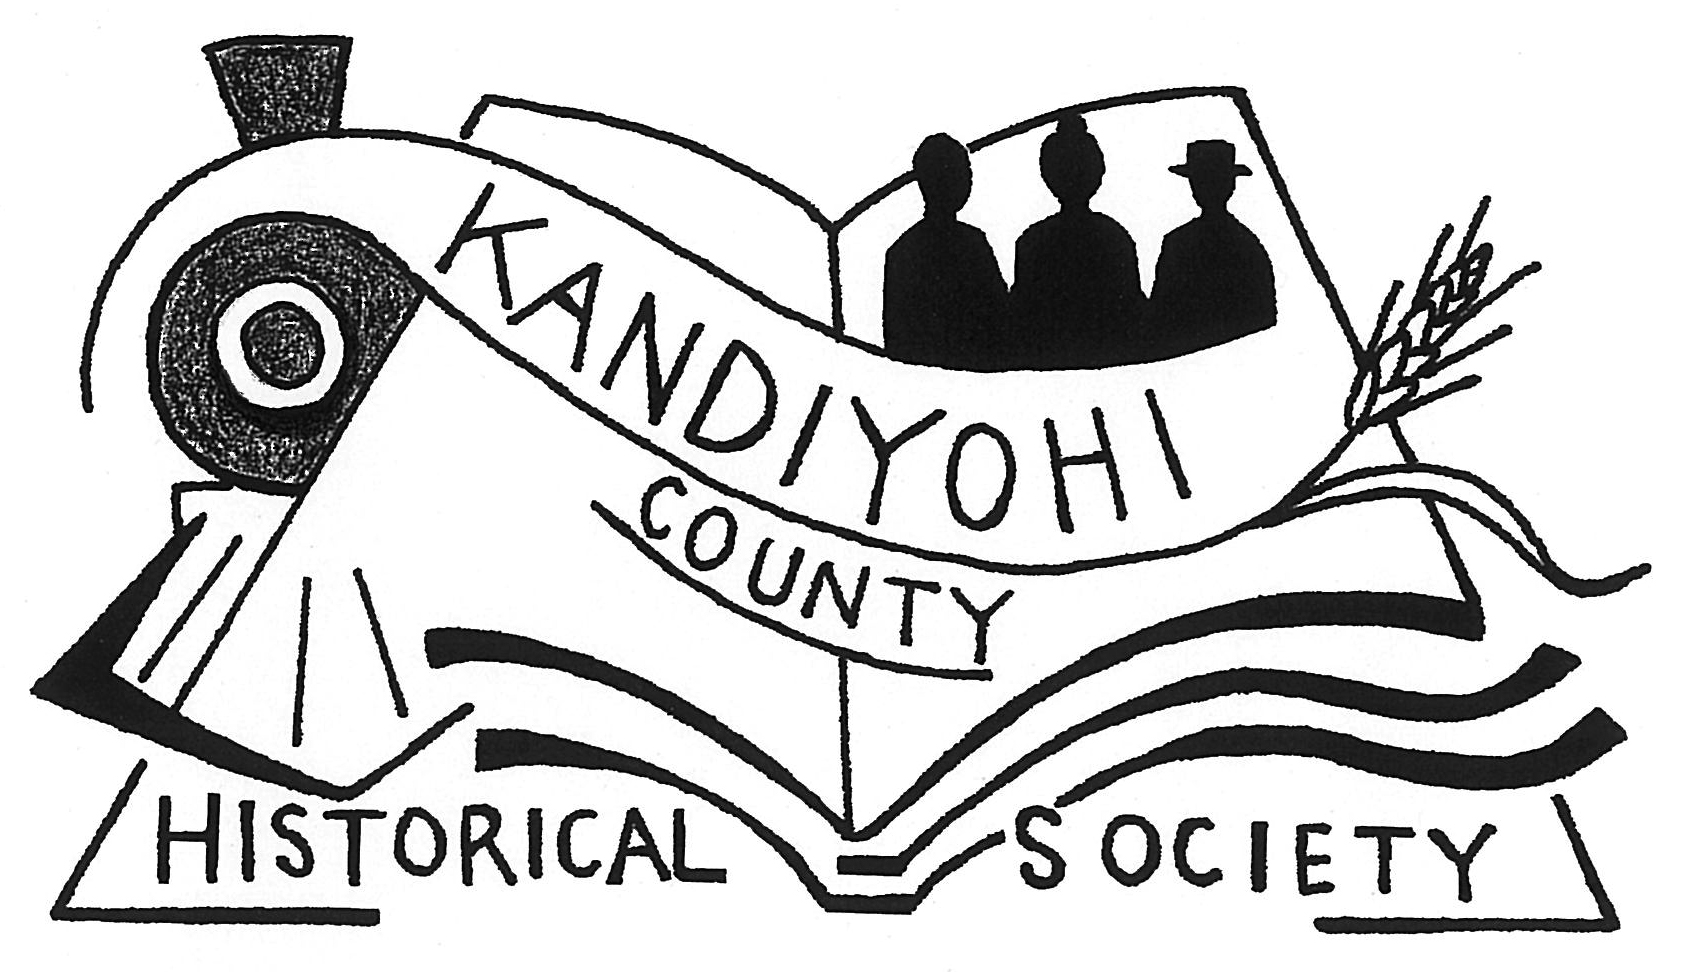 Kandiyohi County Historical Society